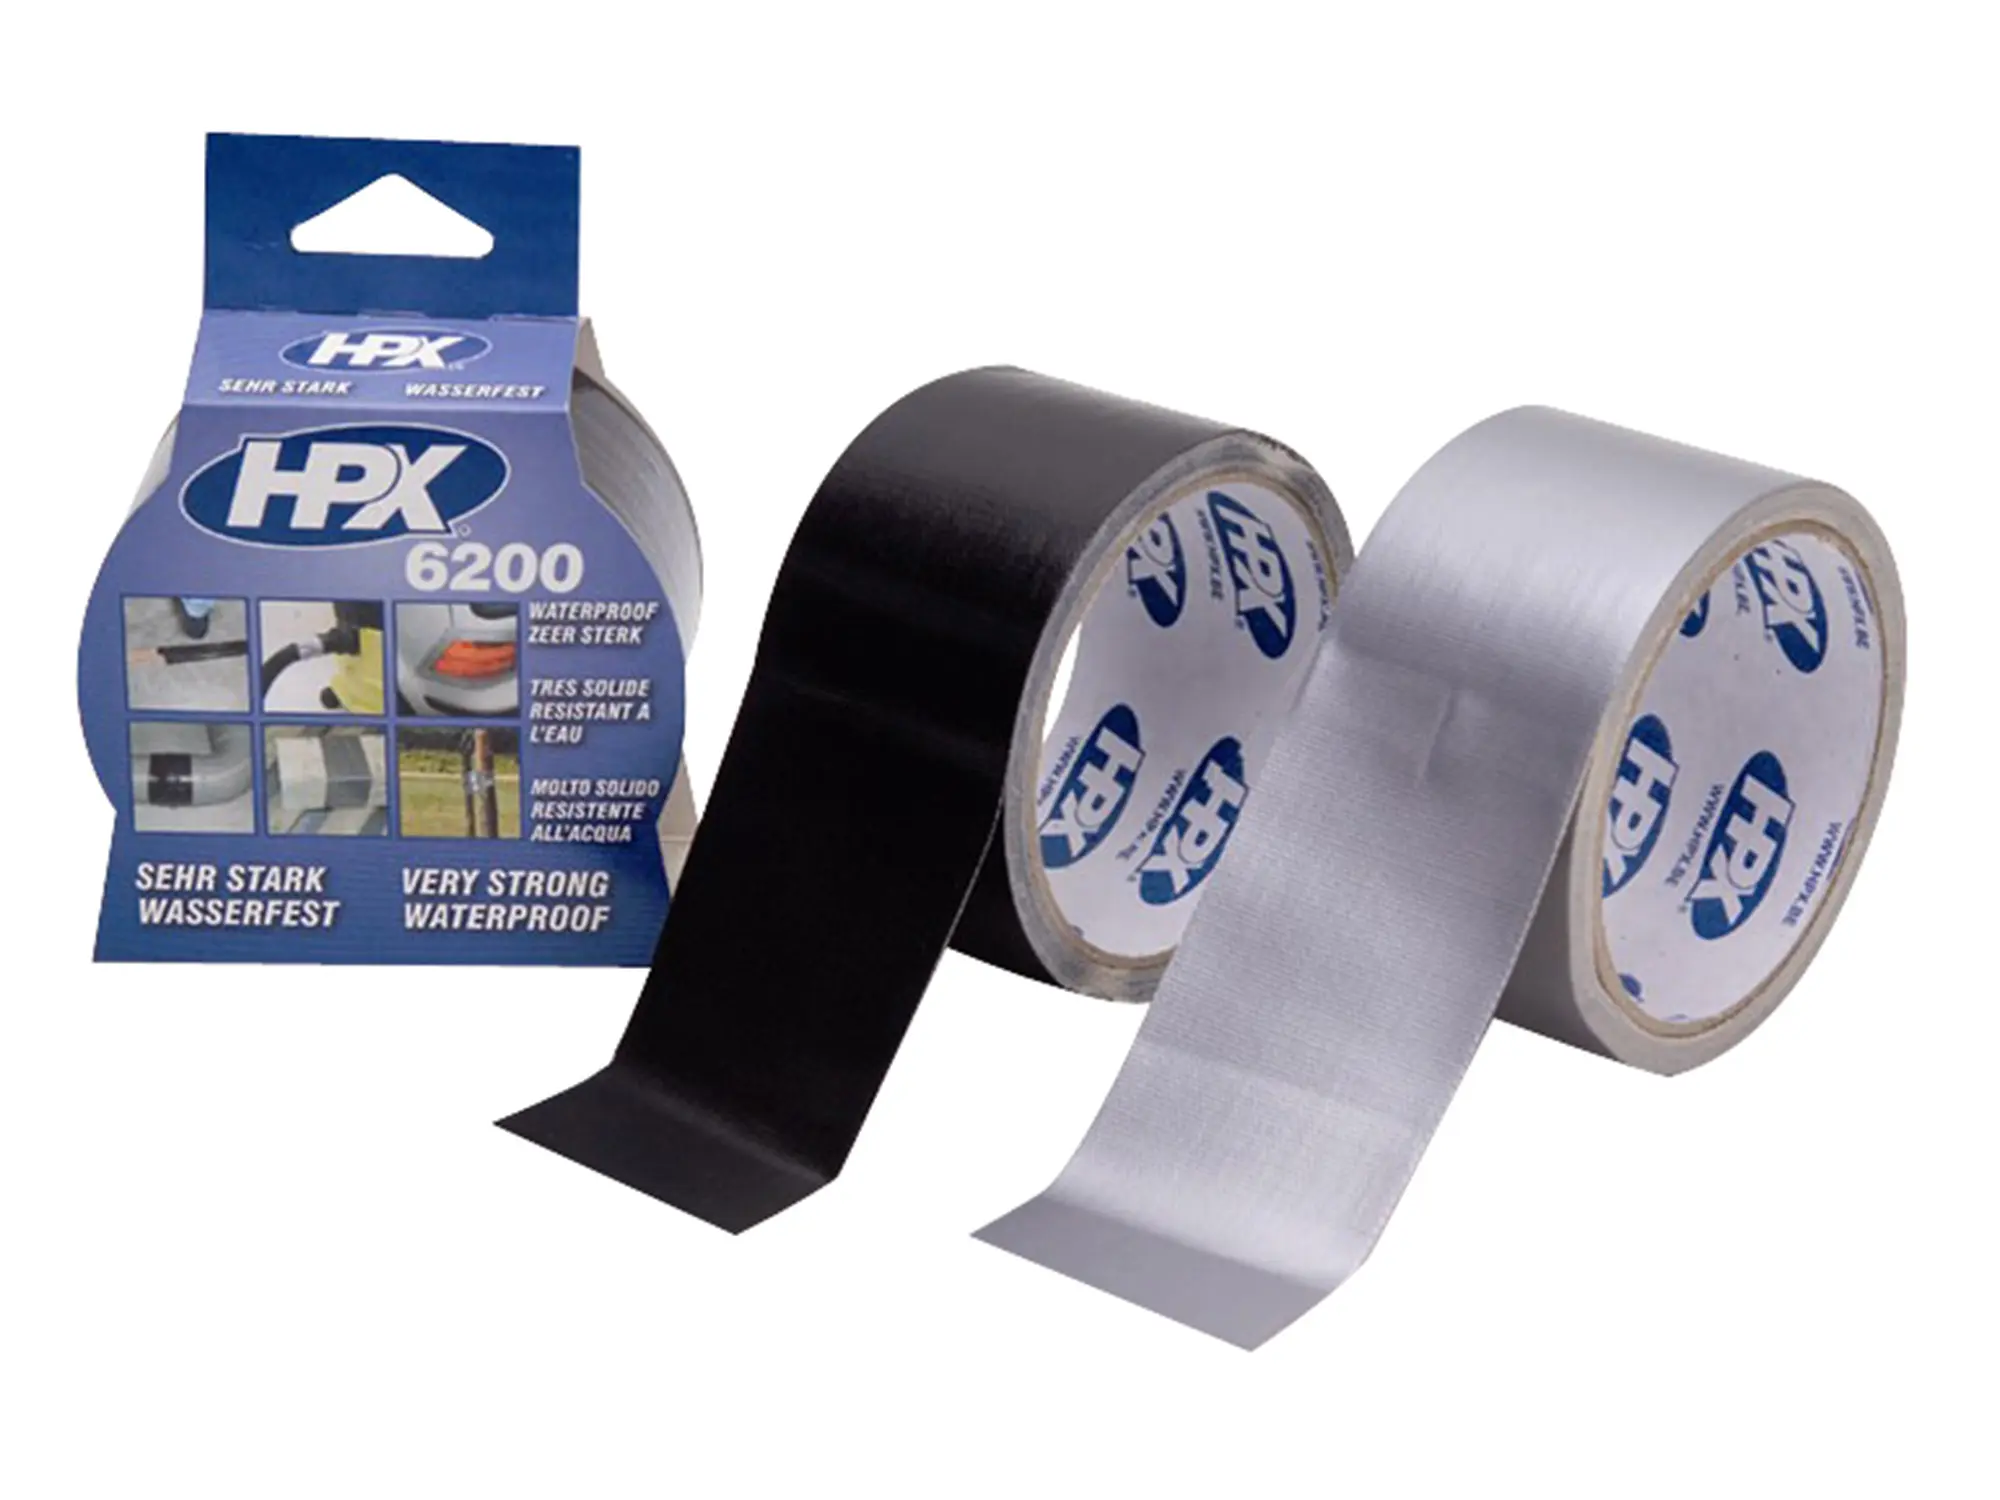 HPX armoured tape 6200, black - 48mmX5m, Item no: 10065025 - Image 1